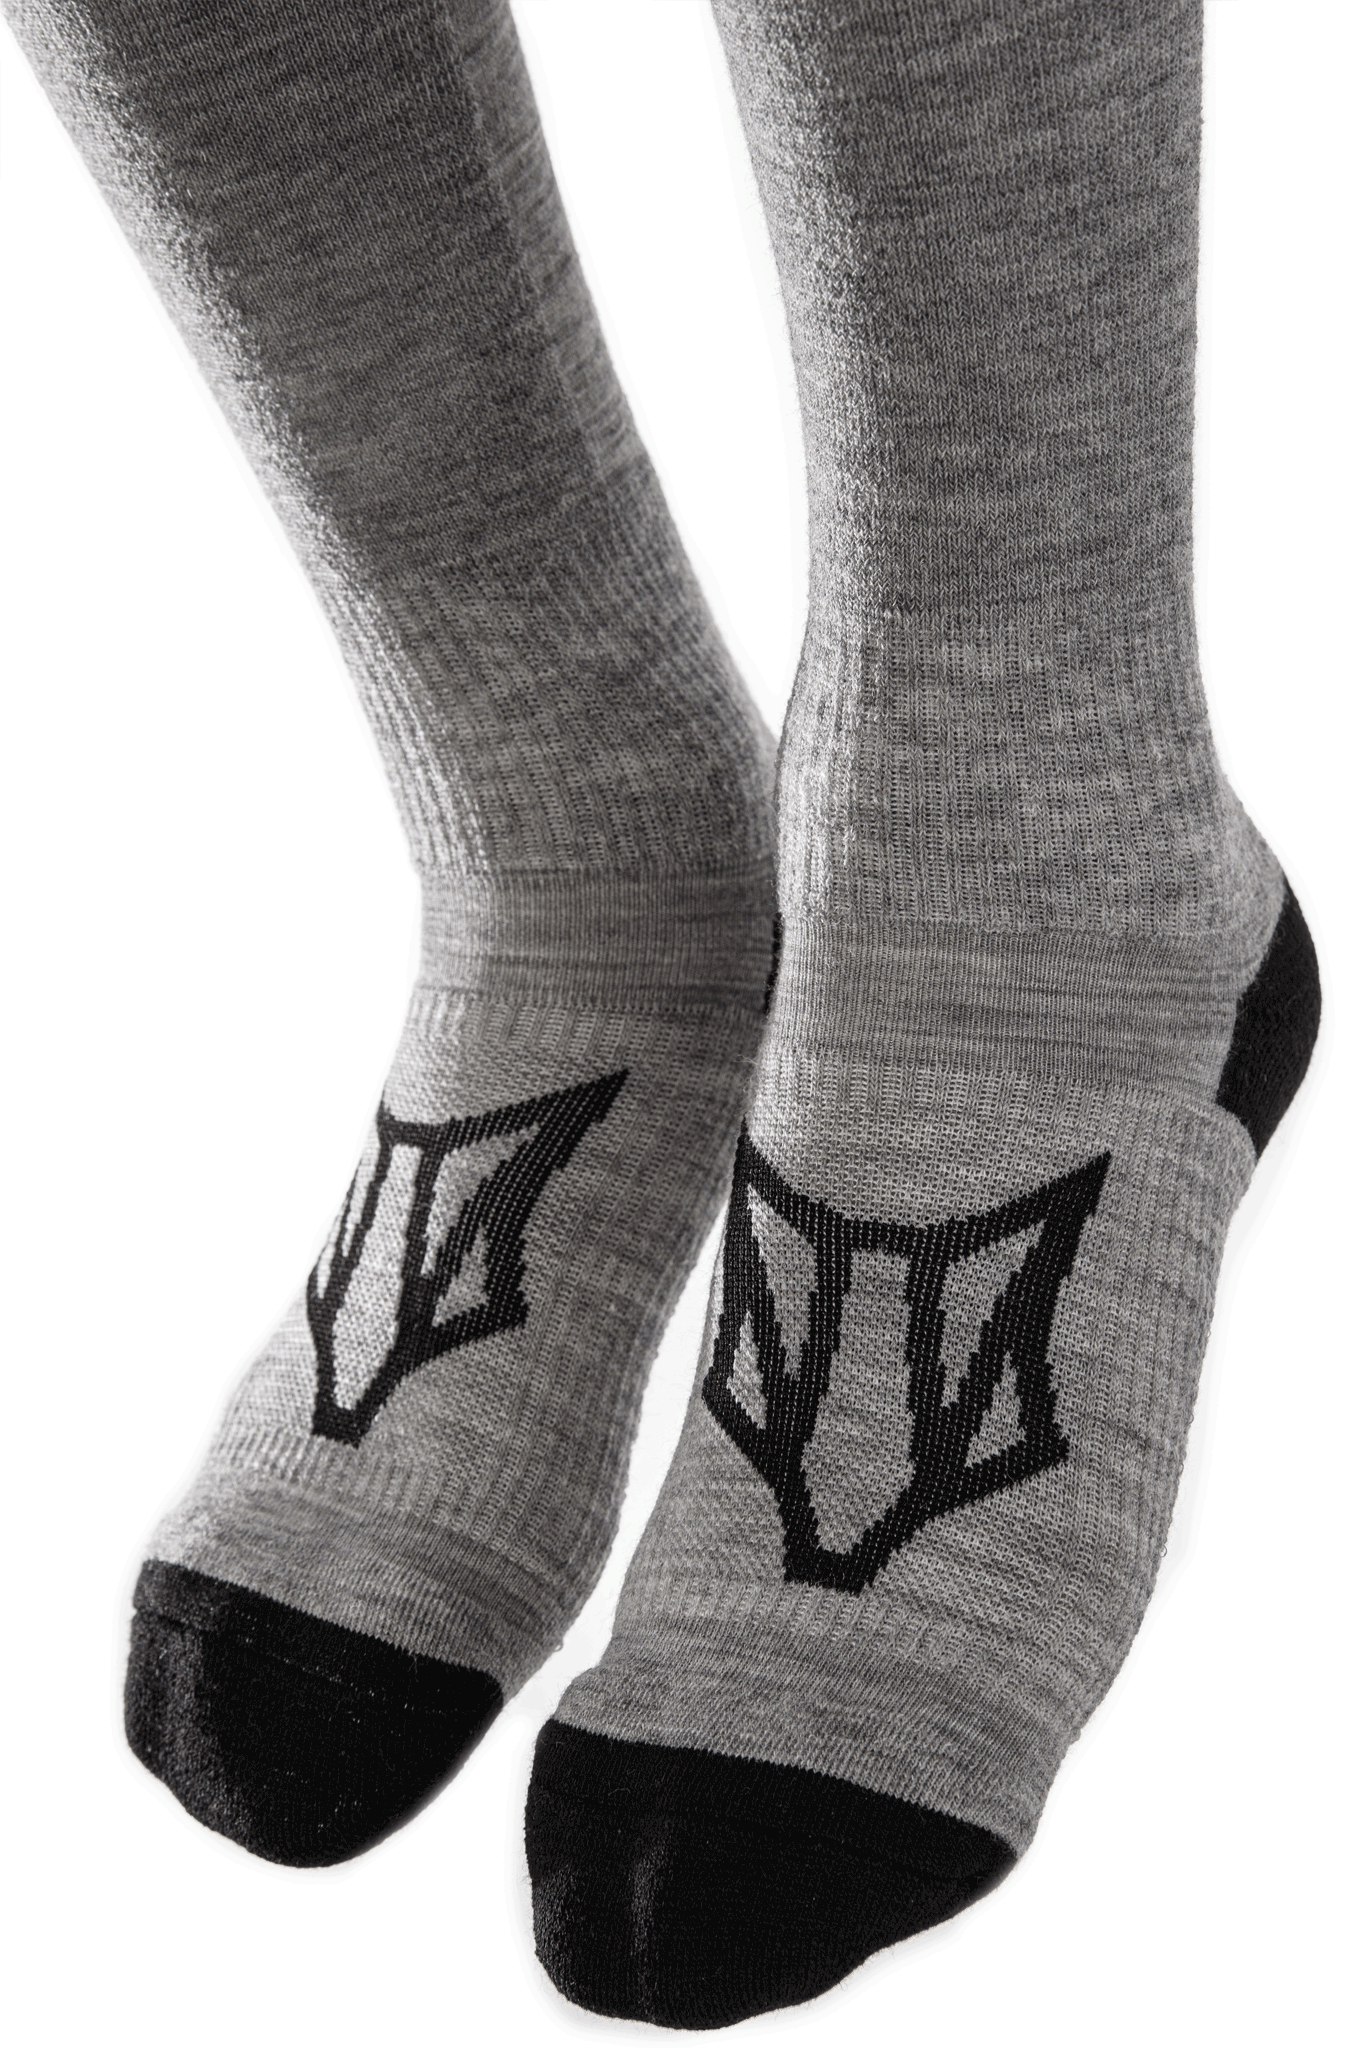 Ulsaak Tech Sock, Merino Wool Snowboard/Ski Socks, Performance Socks